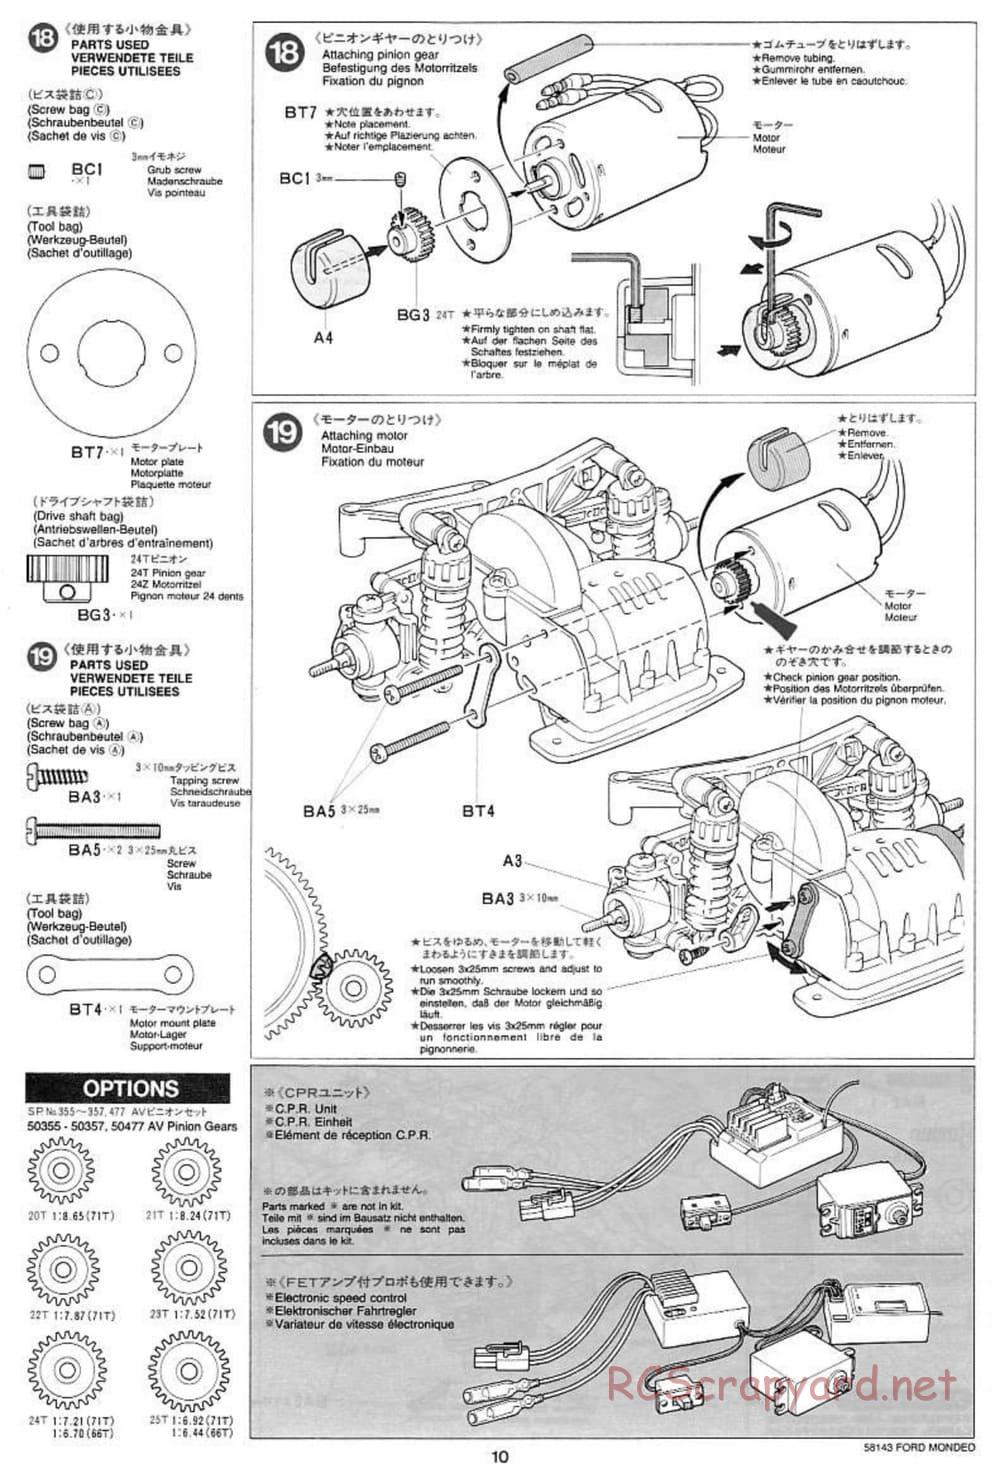 Tamiya - Ford Mondeo BTCC - FF-01 Chassis - Manual - Page 10